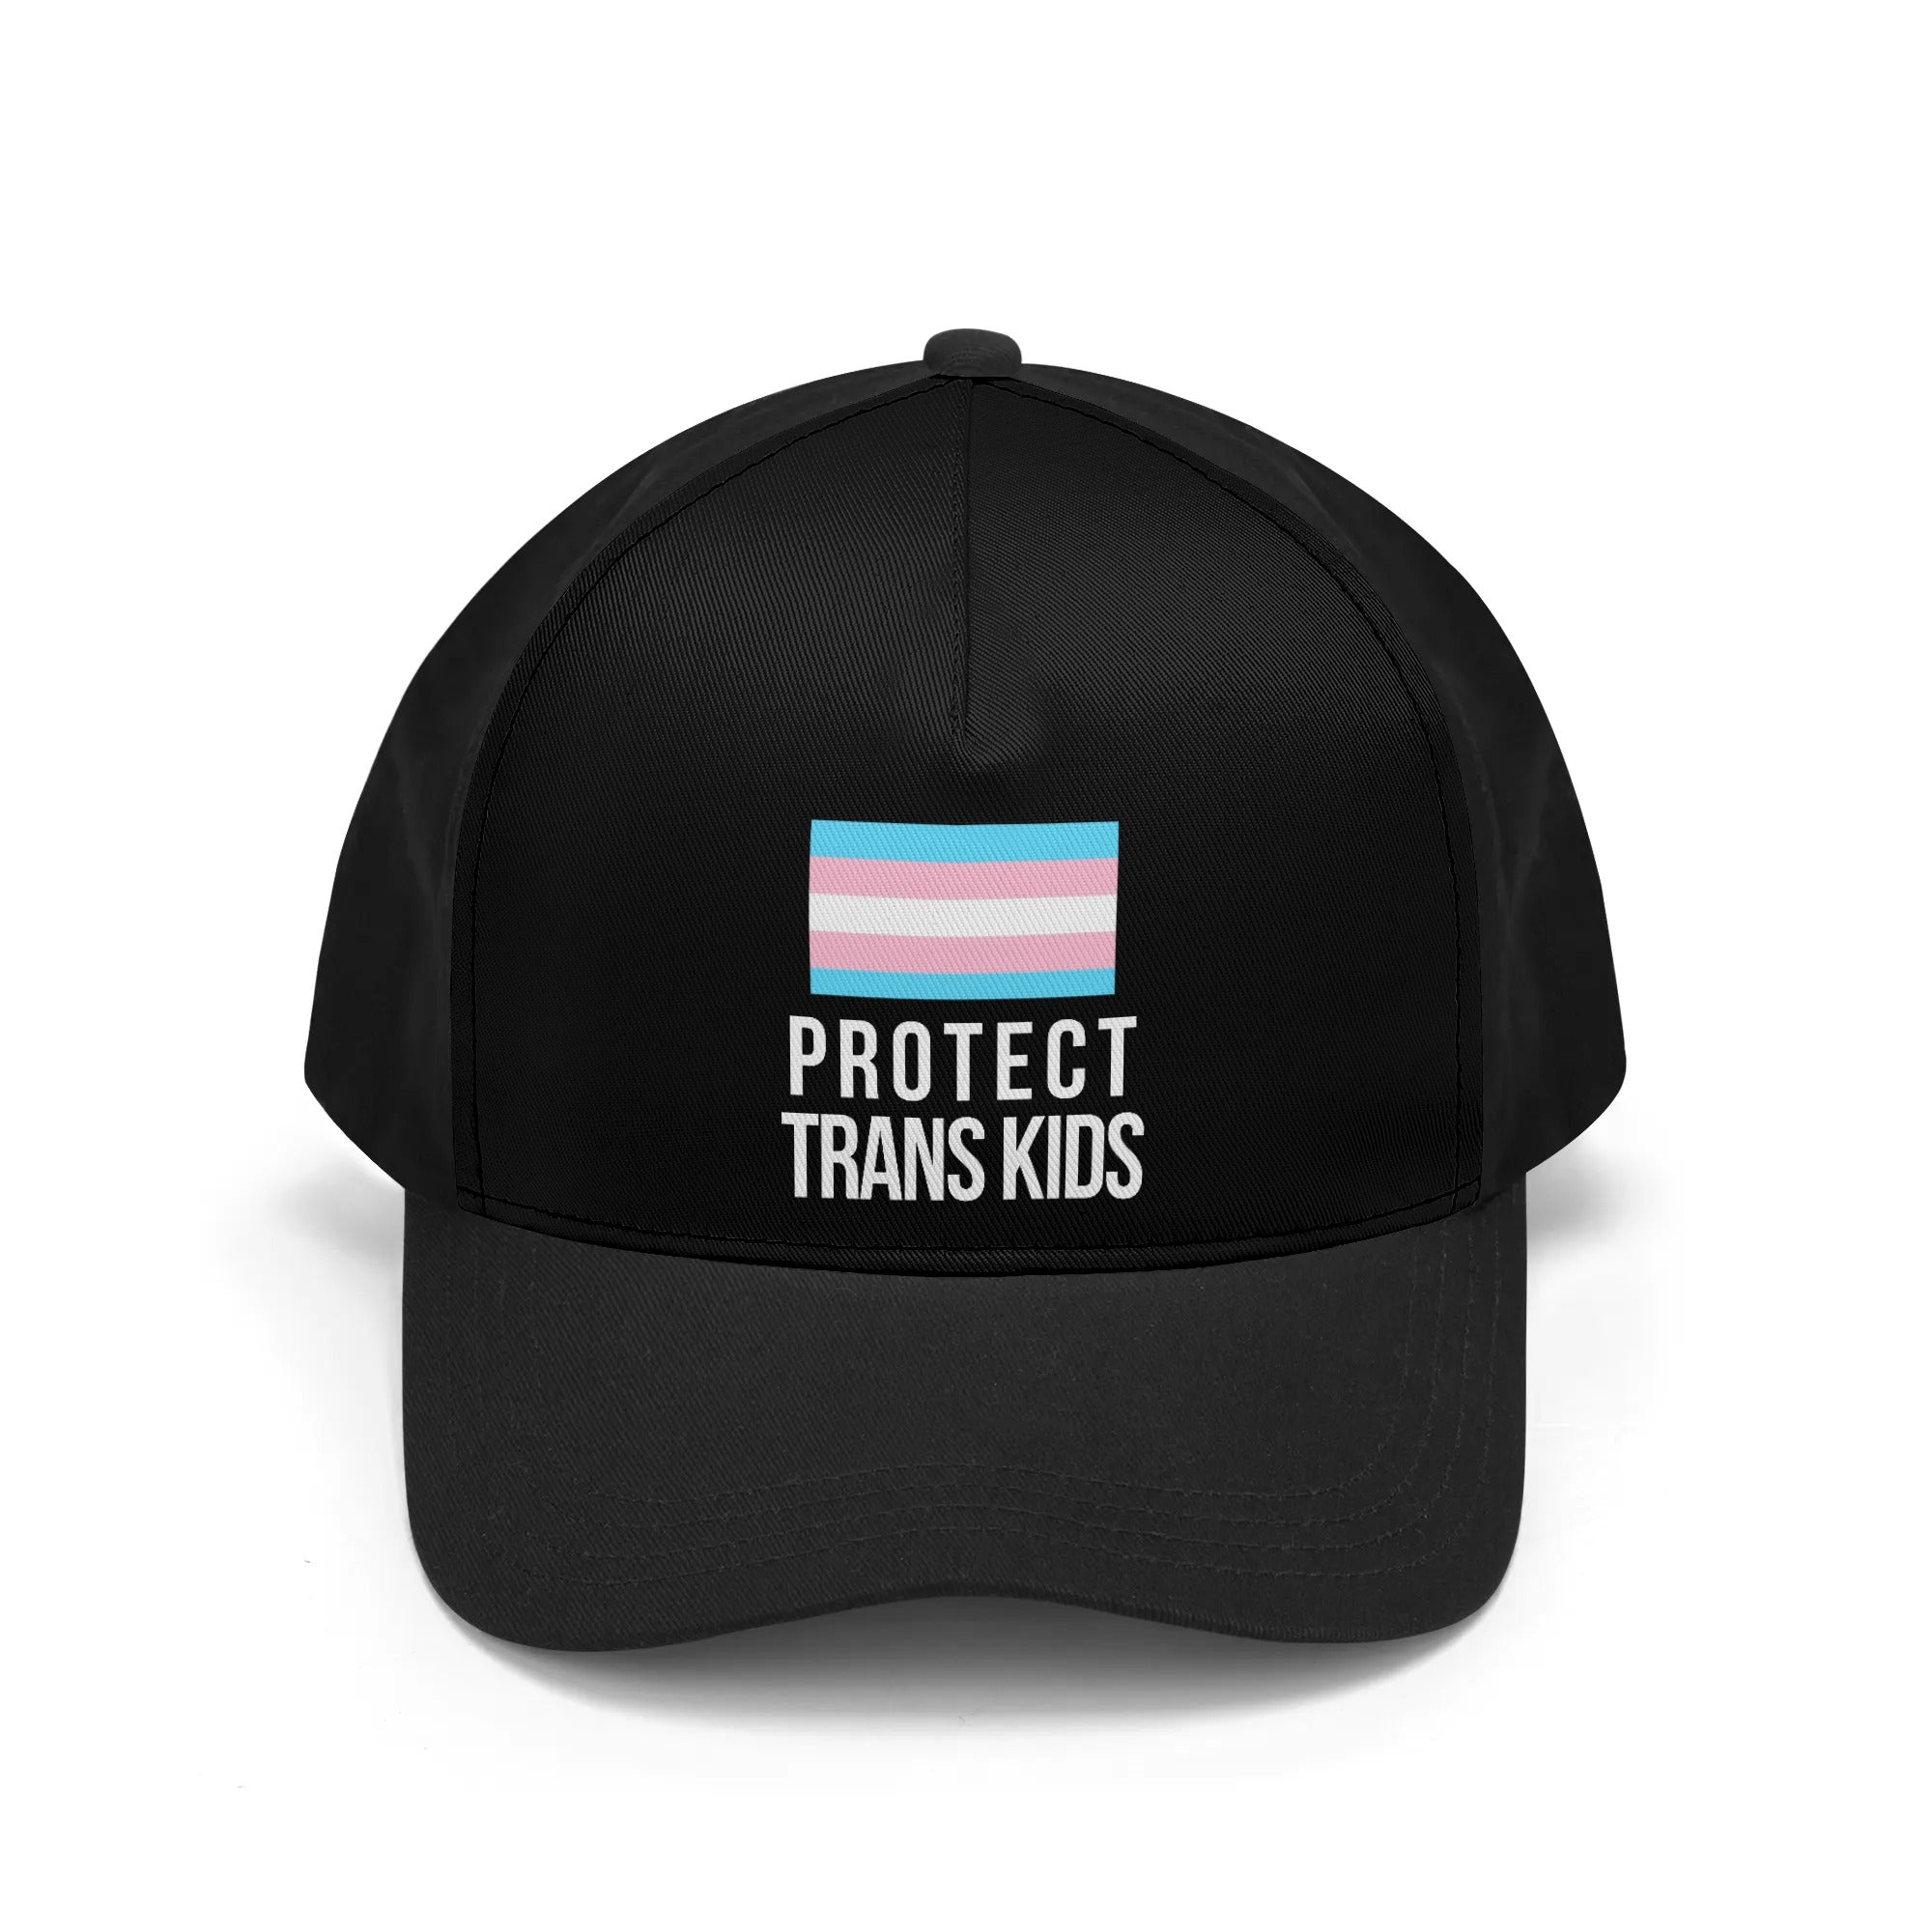 Protect Trans Kids Printed Baseball Cap